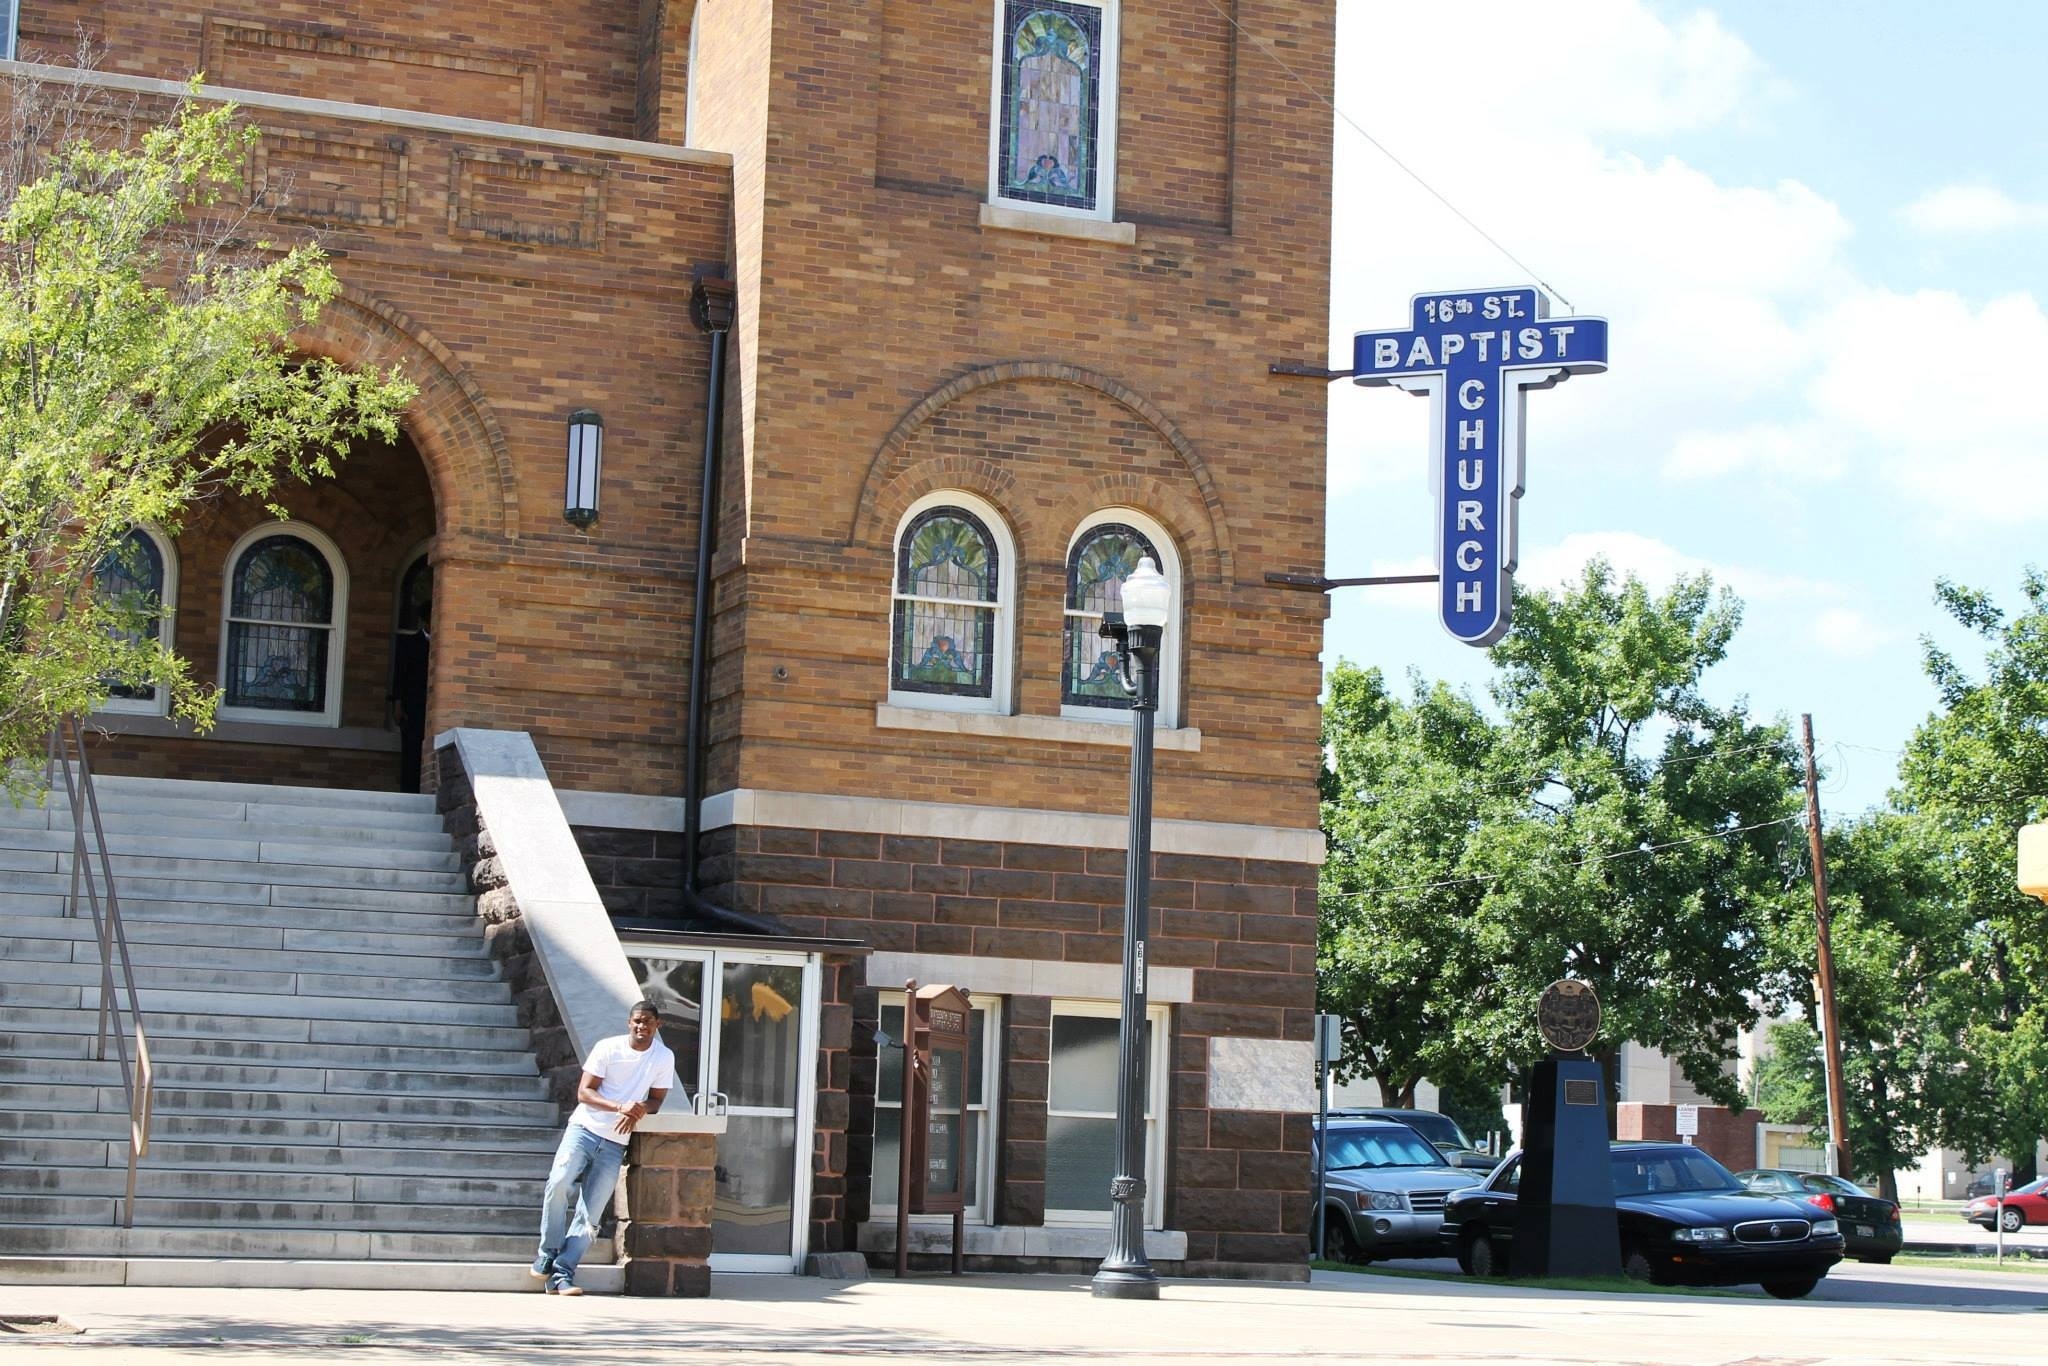 16th Street Baptist Church In Downtown